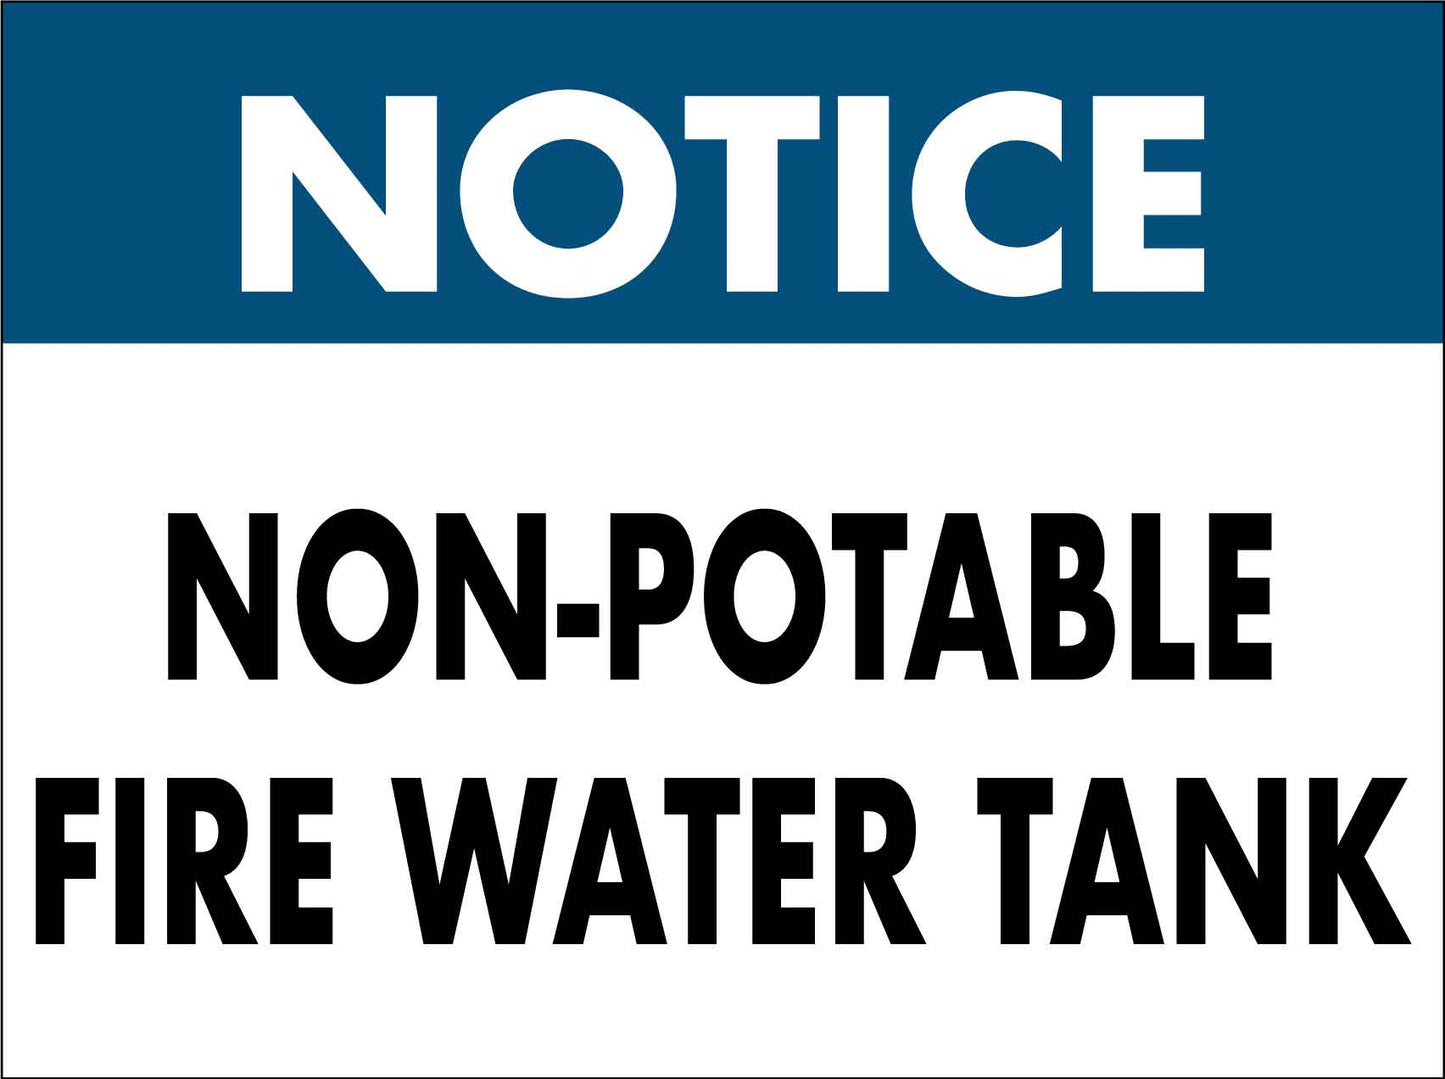 Notice Non-Potable Fire Water Tank